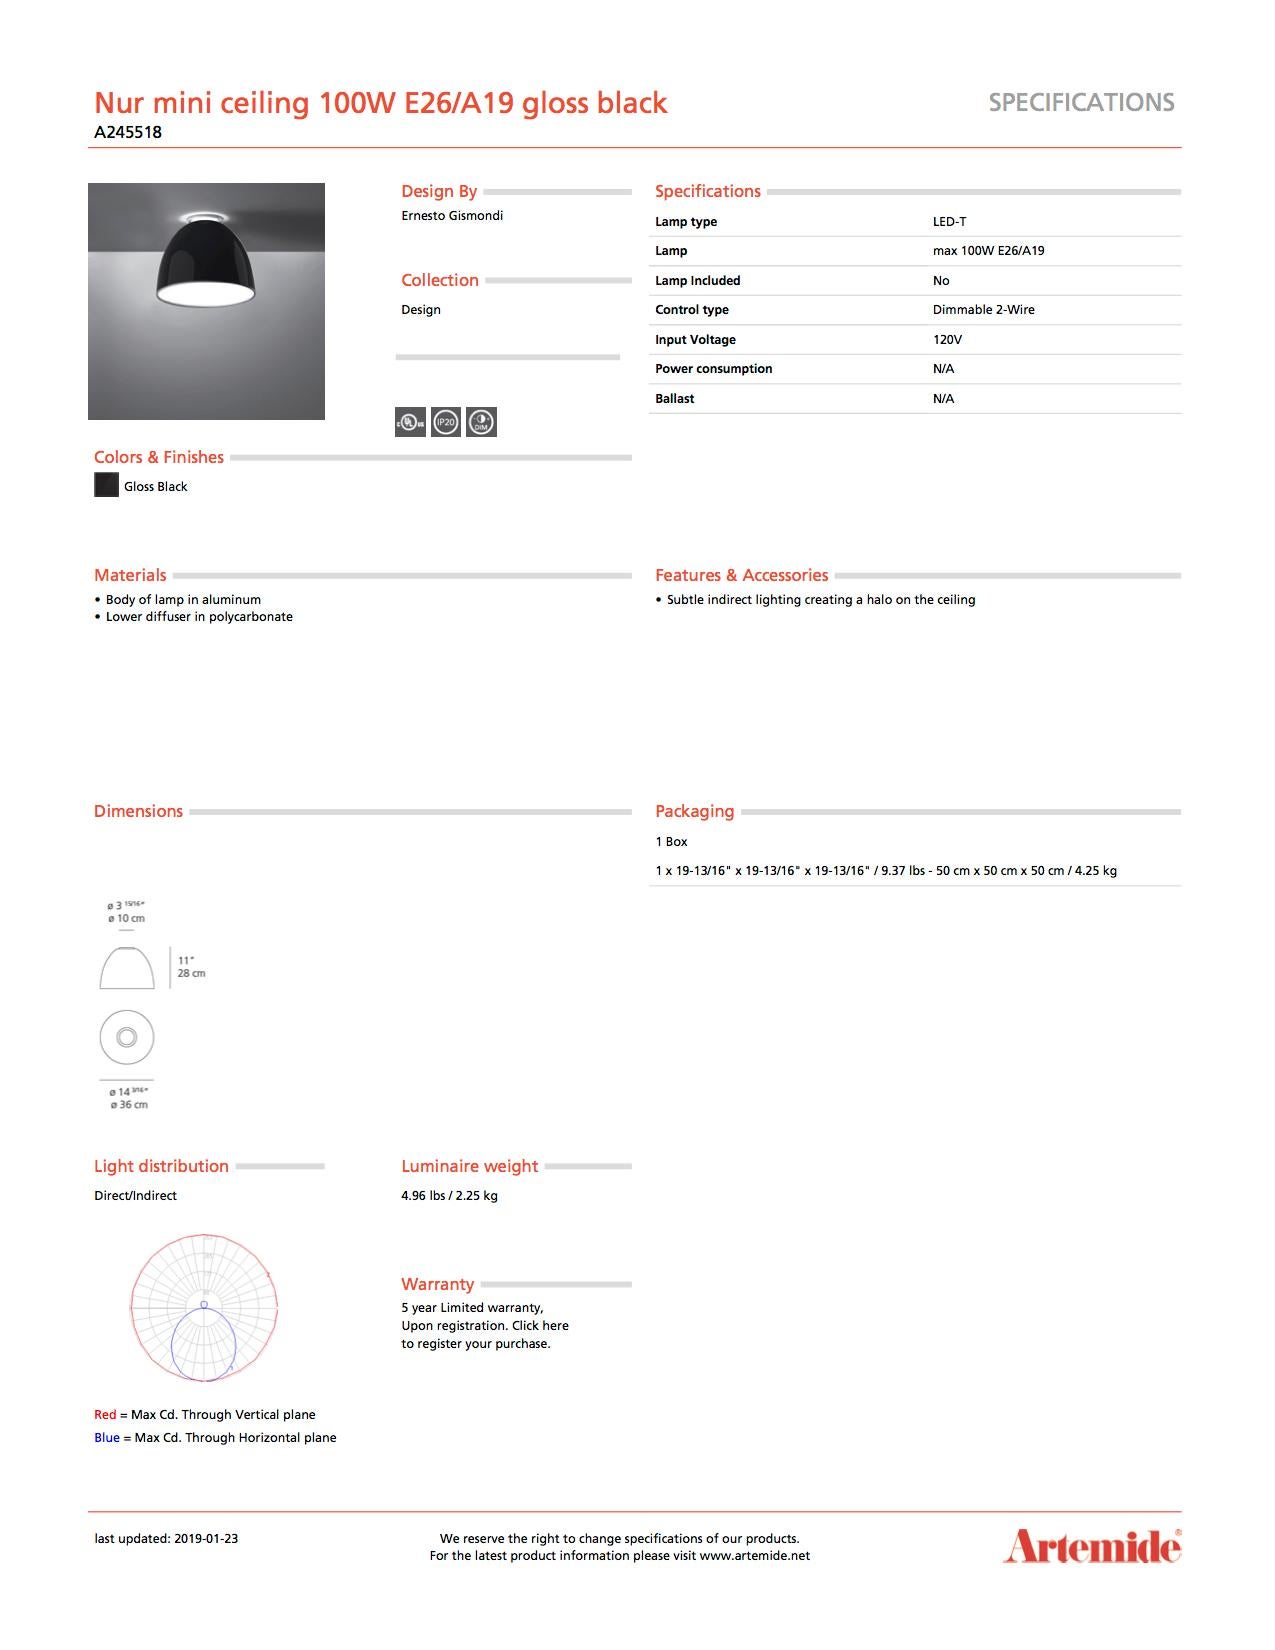 Modern Artemide Nur Mini 100W E26/A19 Ceiling Light in Glossy Black For Sale